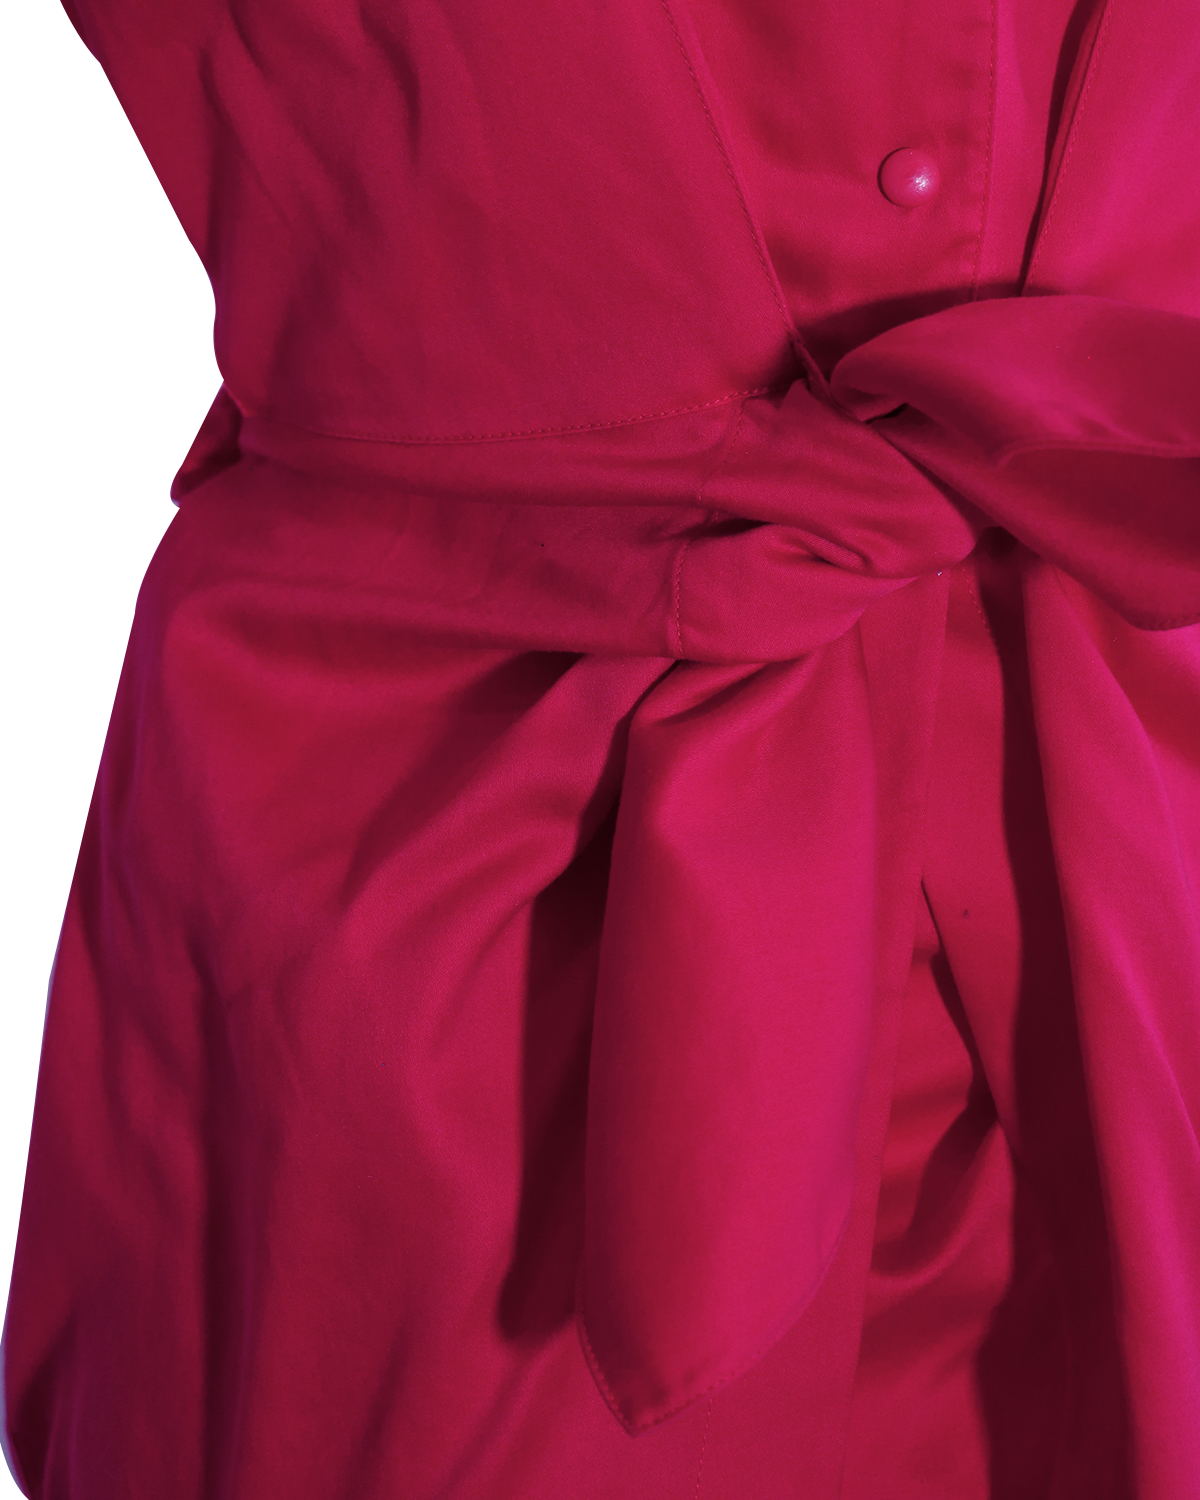 Thierry Mugler fuchsia dress from 1980s